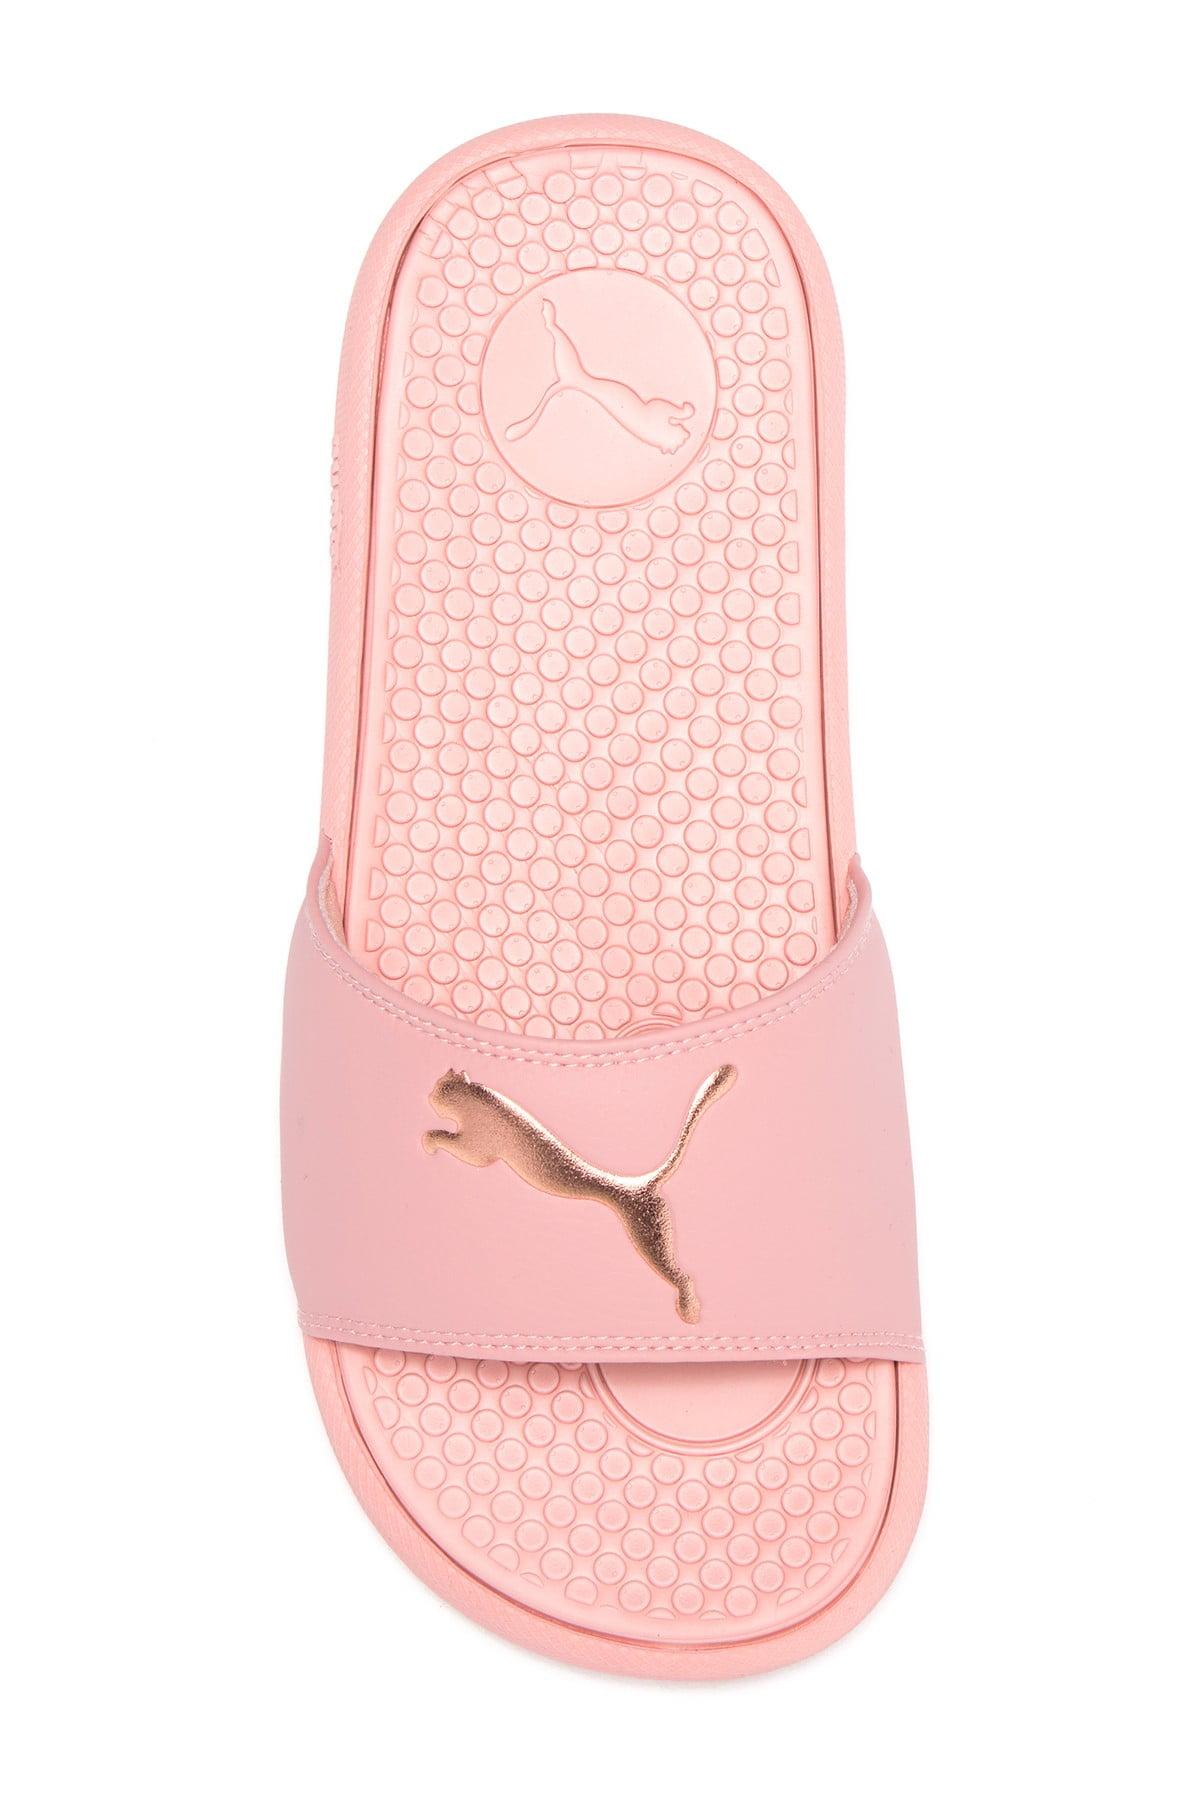 puma sandals pink